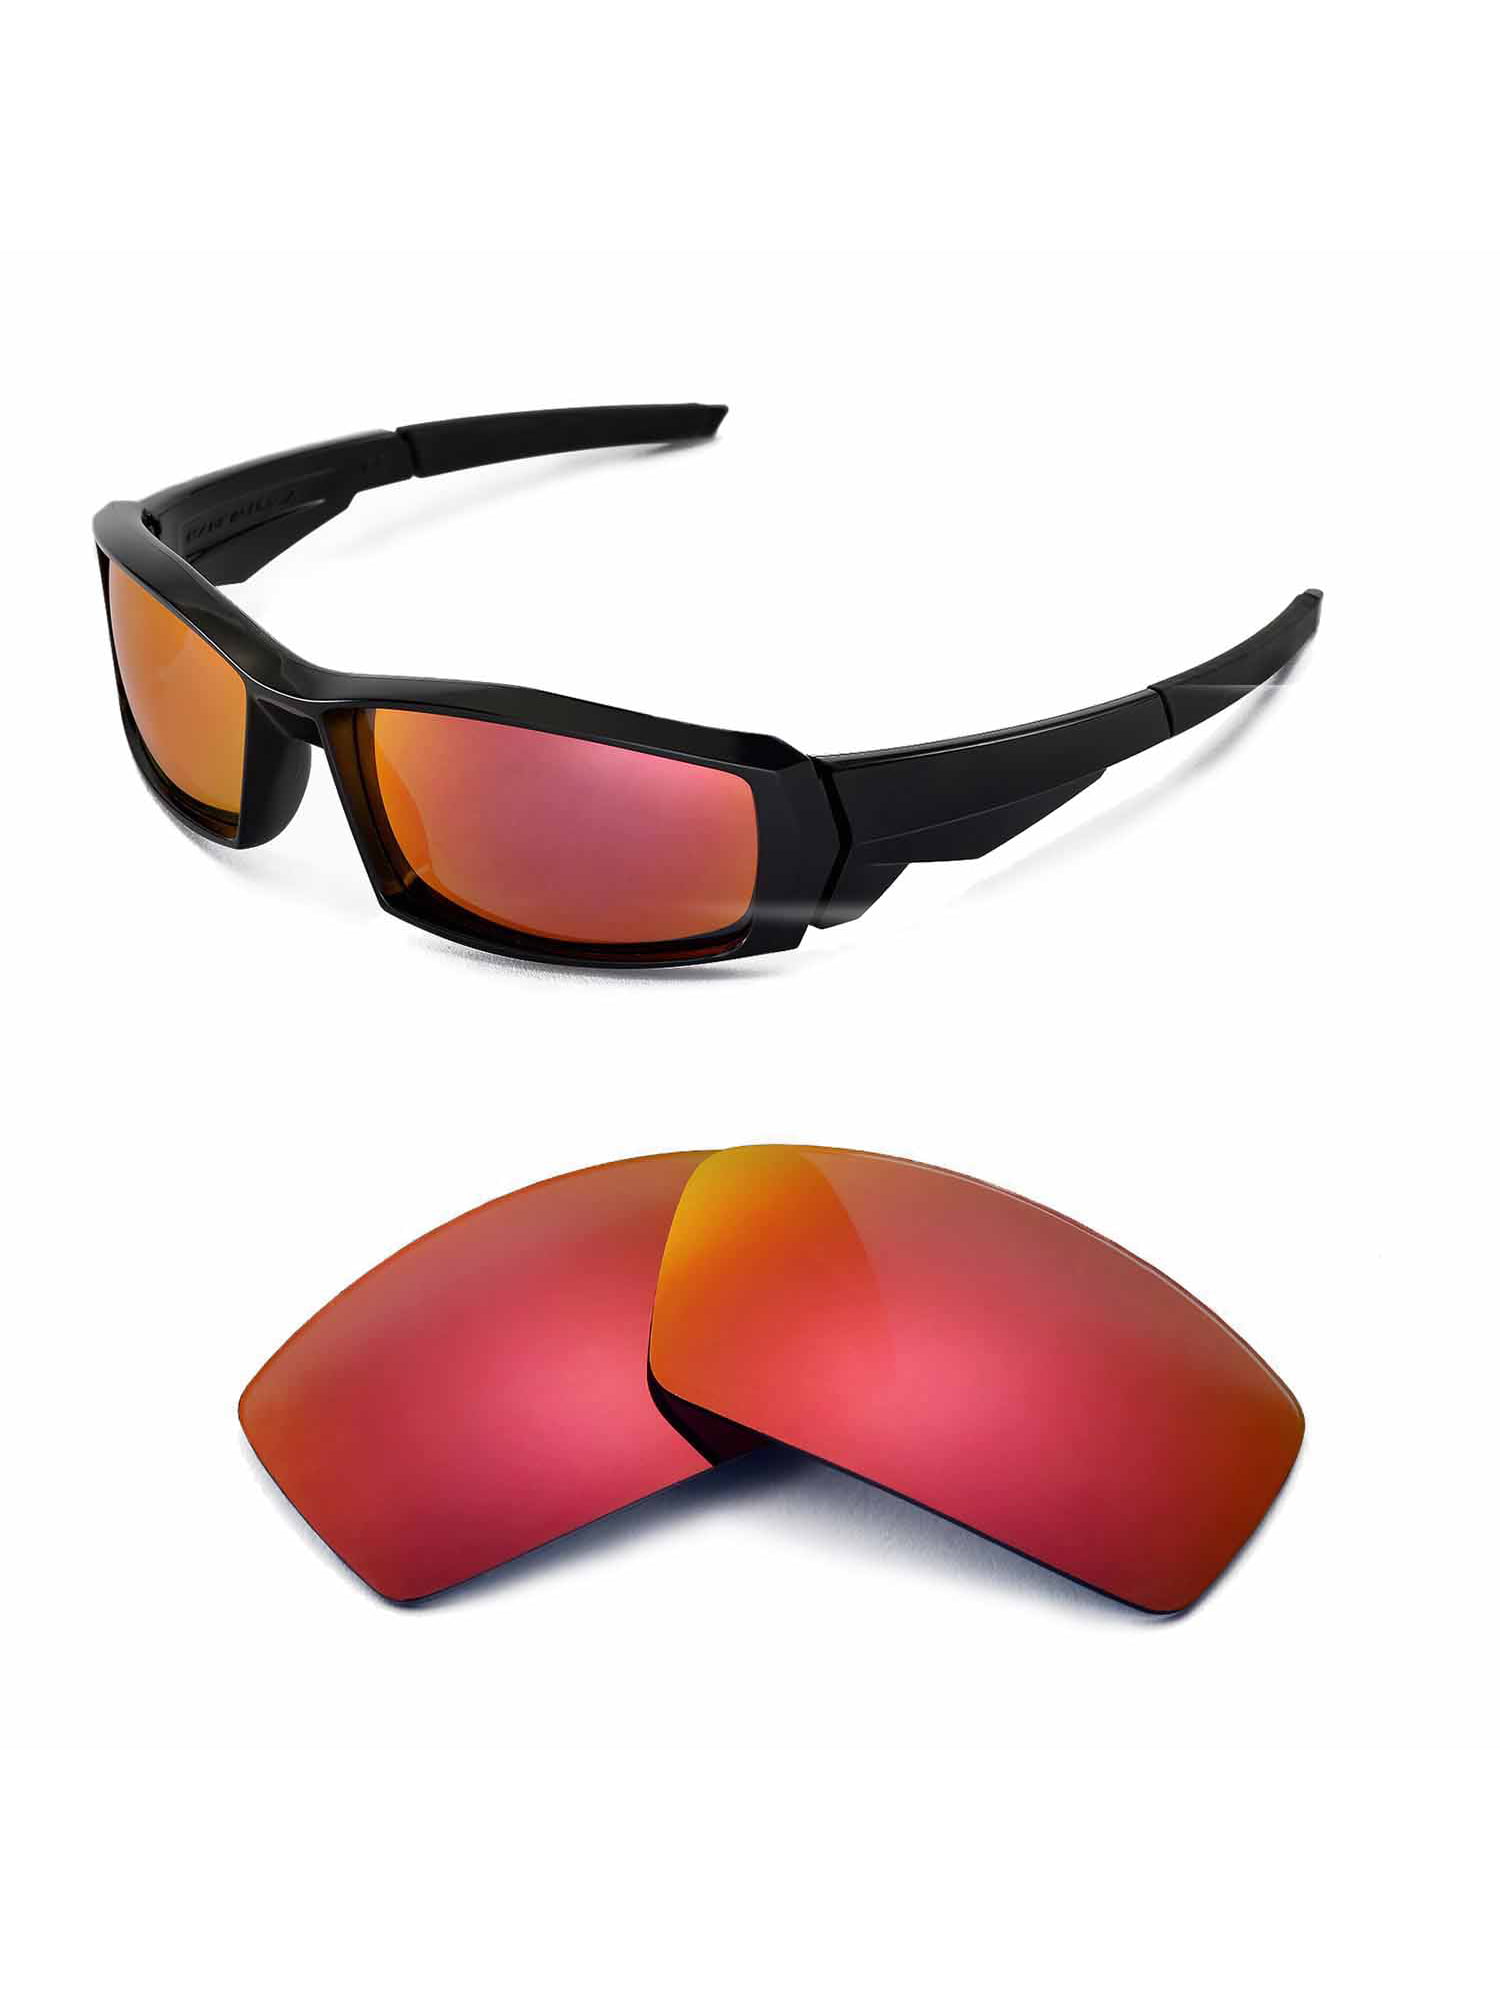 oakley canteen polarized sunglasses